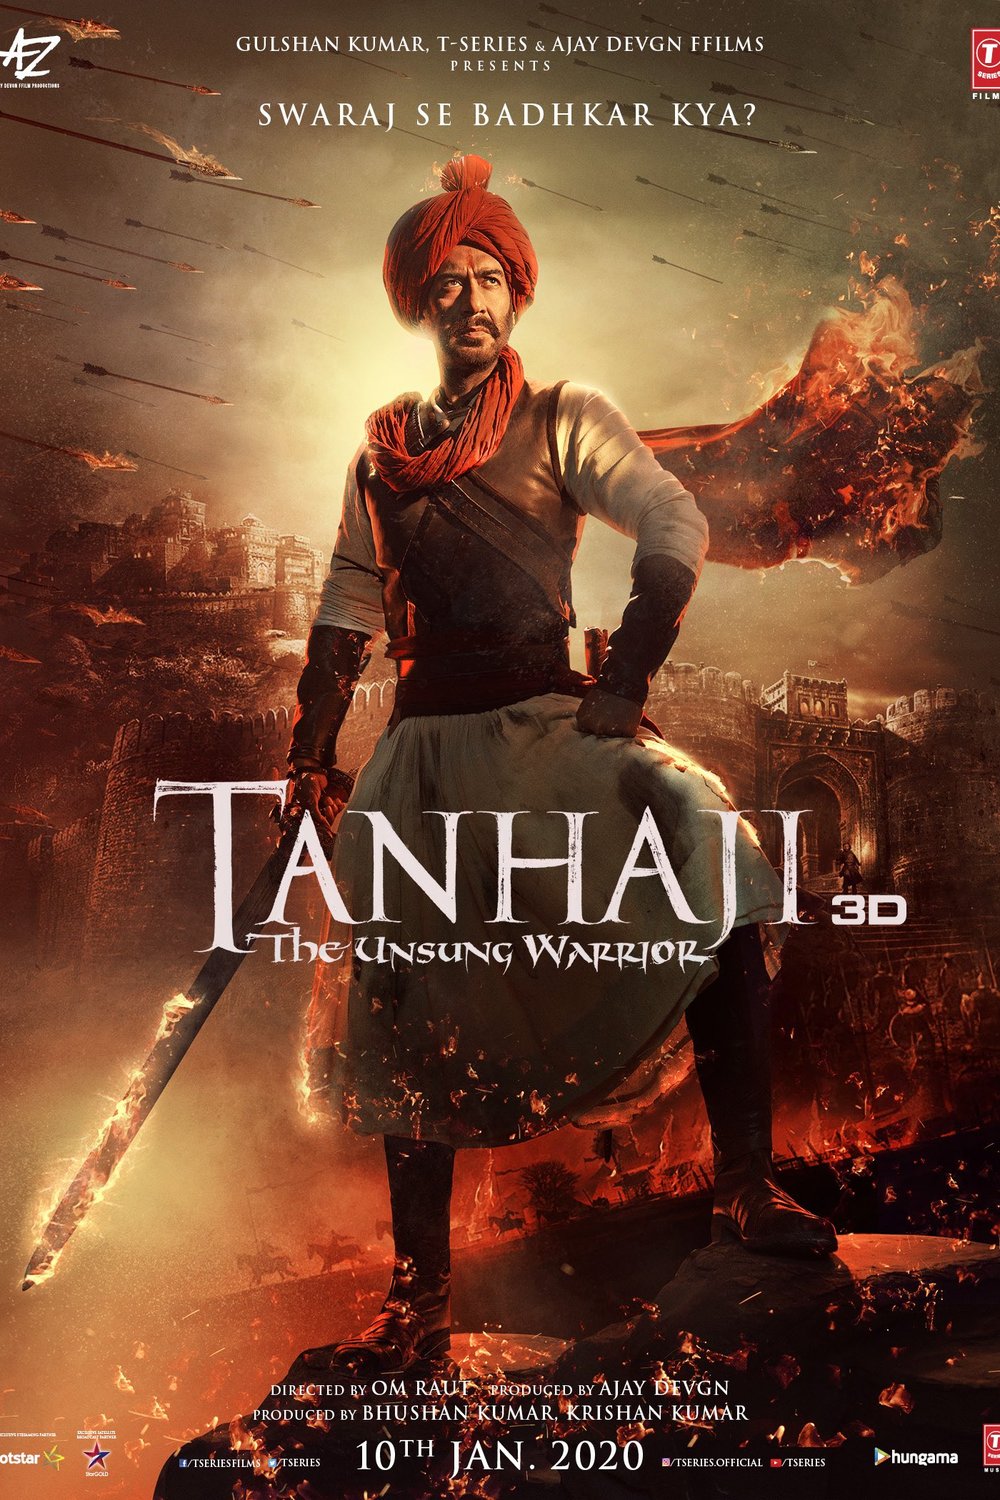 Hindi poster of the movie Tanhaji: The Unsung Warrior